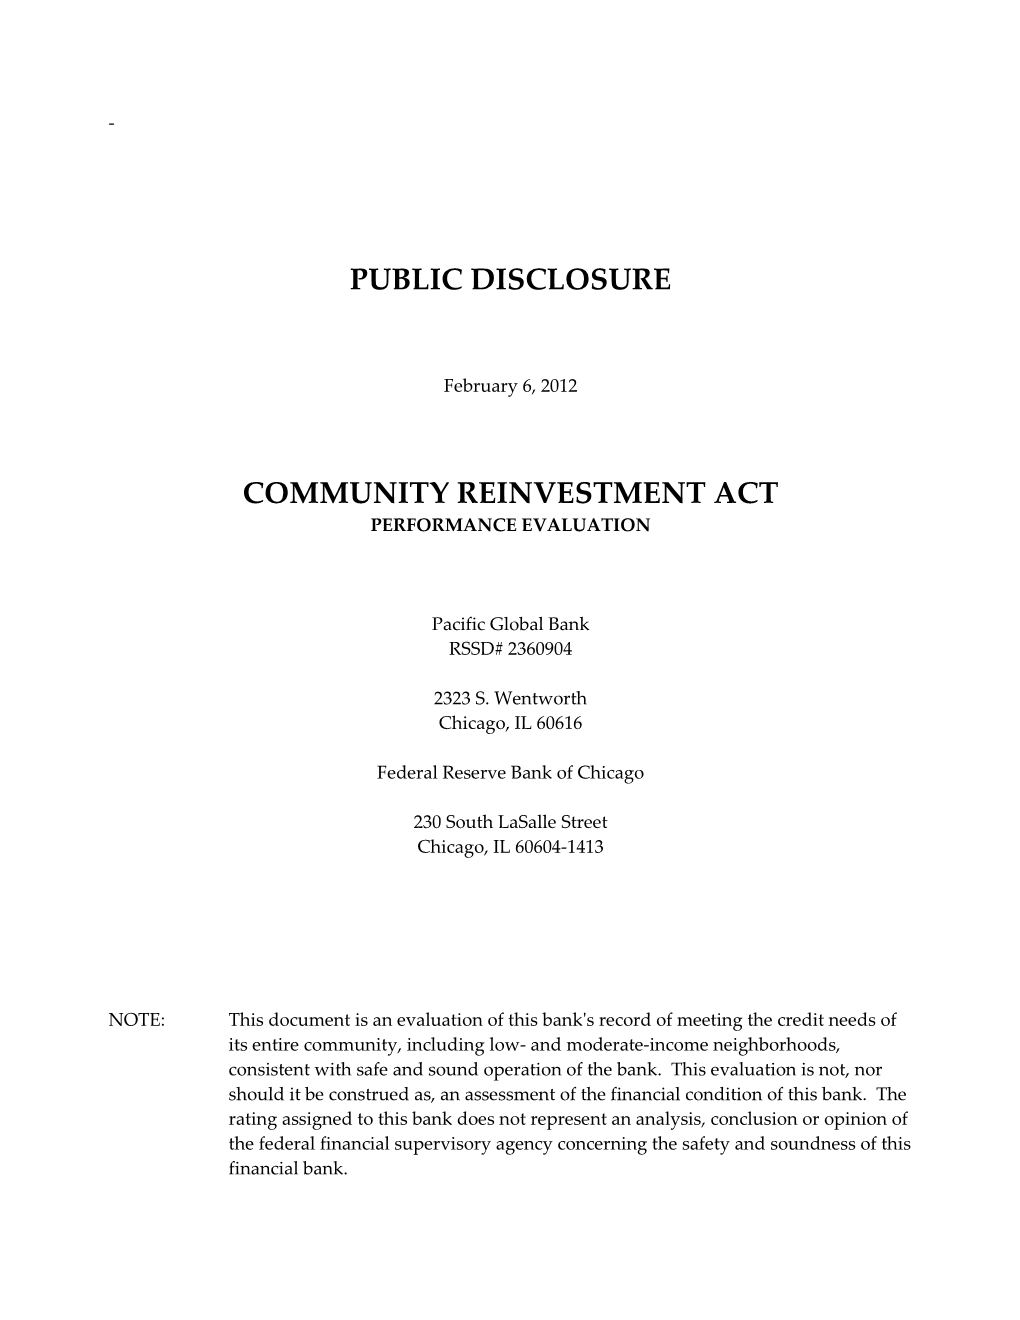 Public Disclosure Community Reinvestment